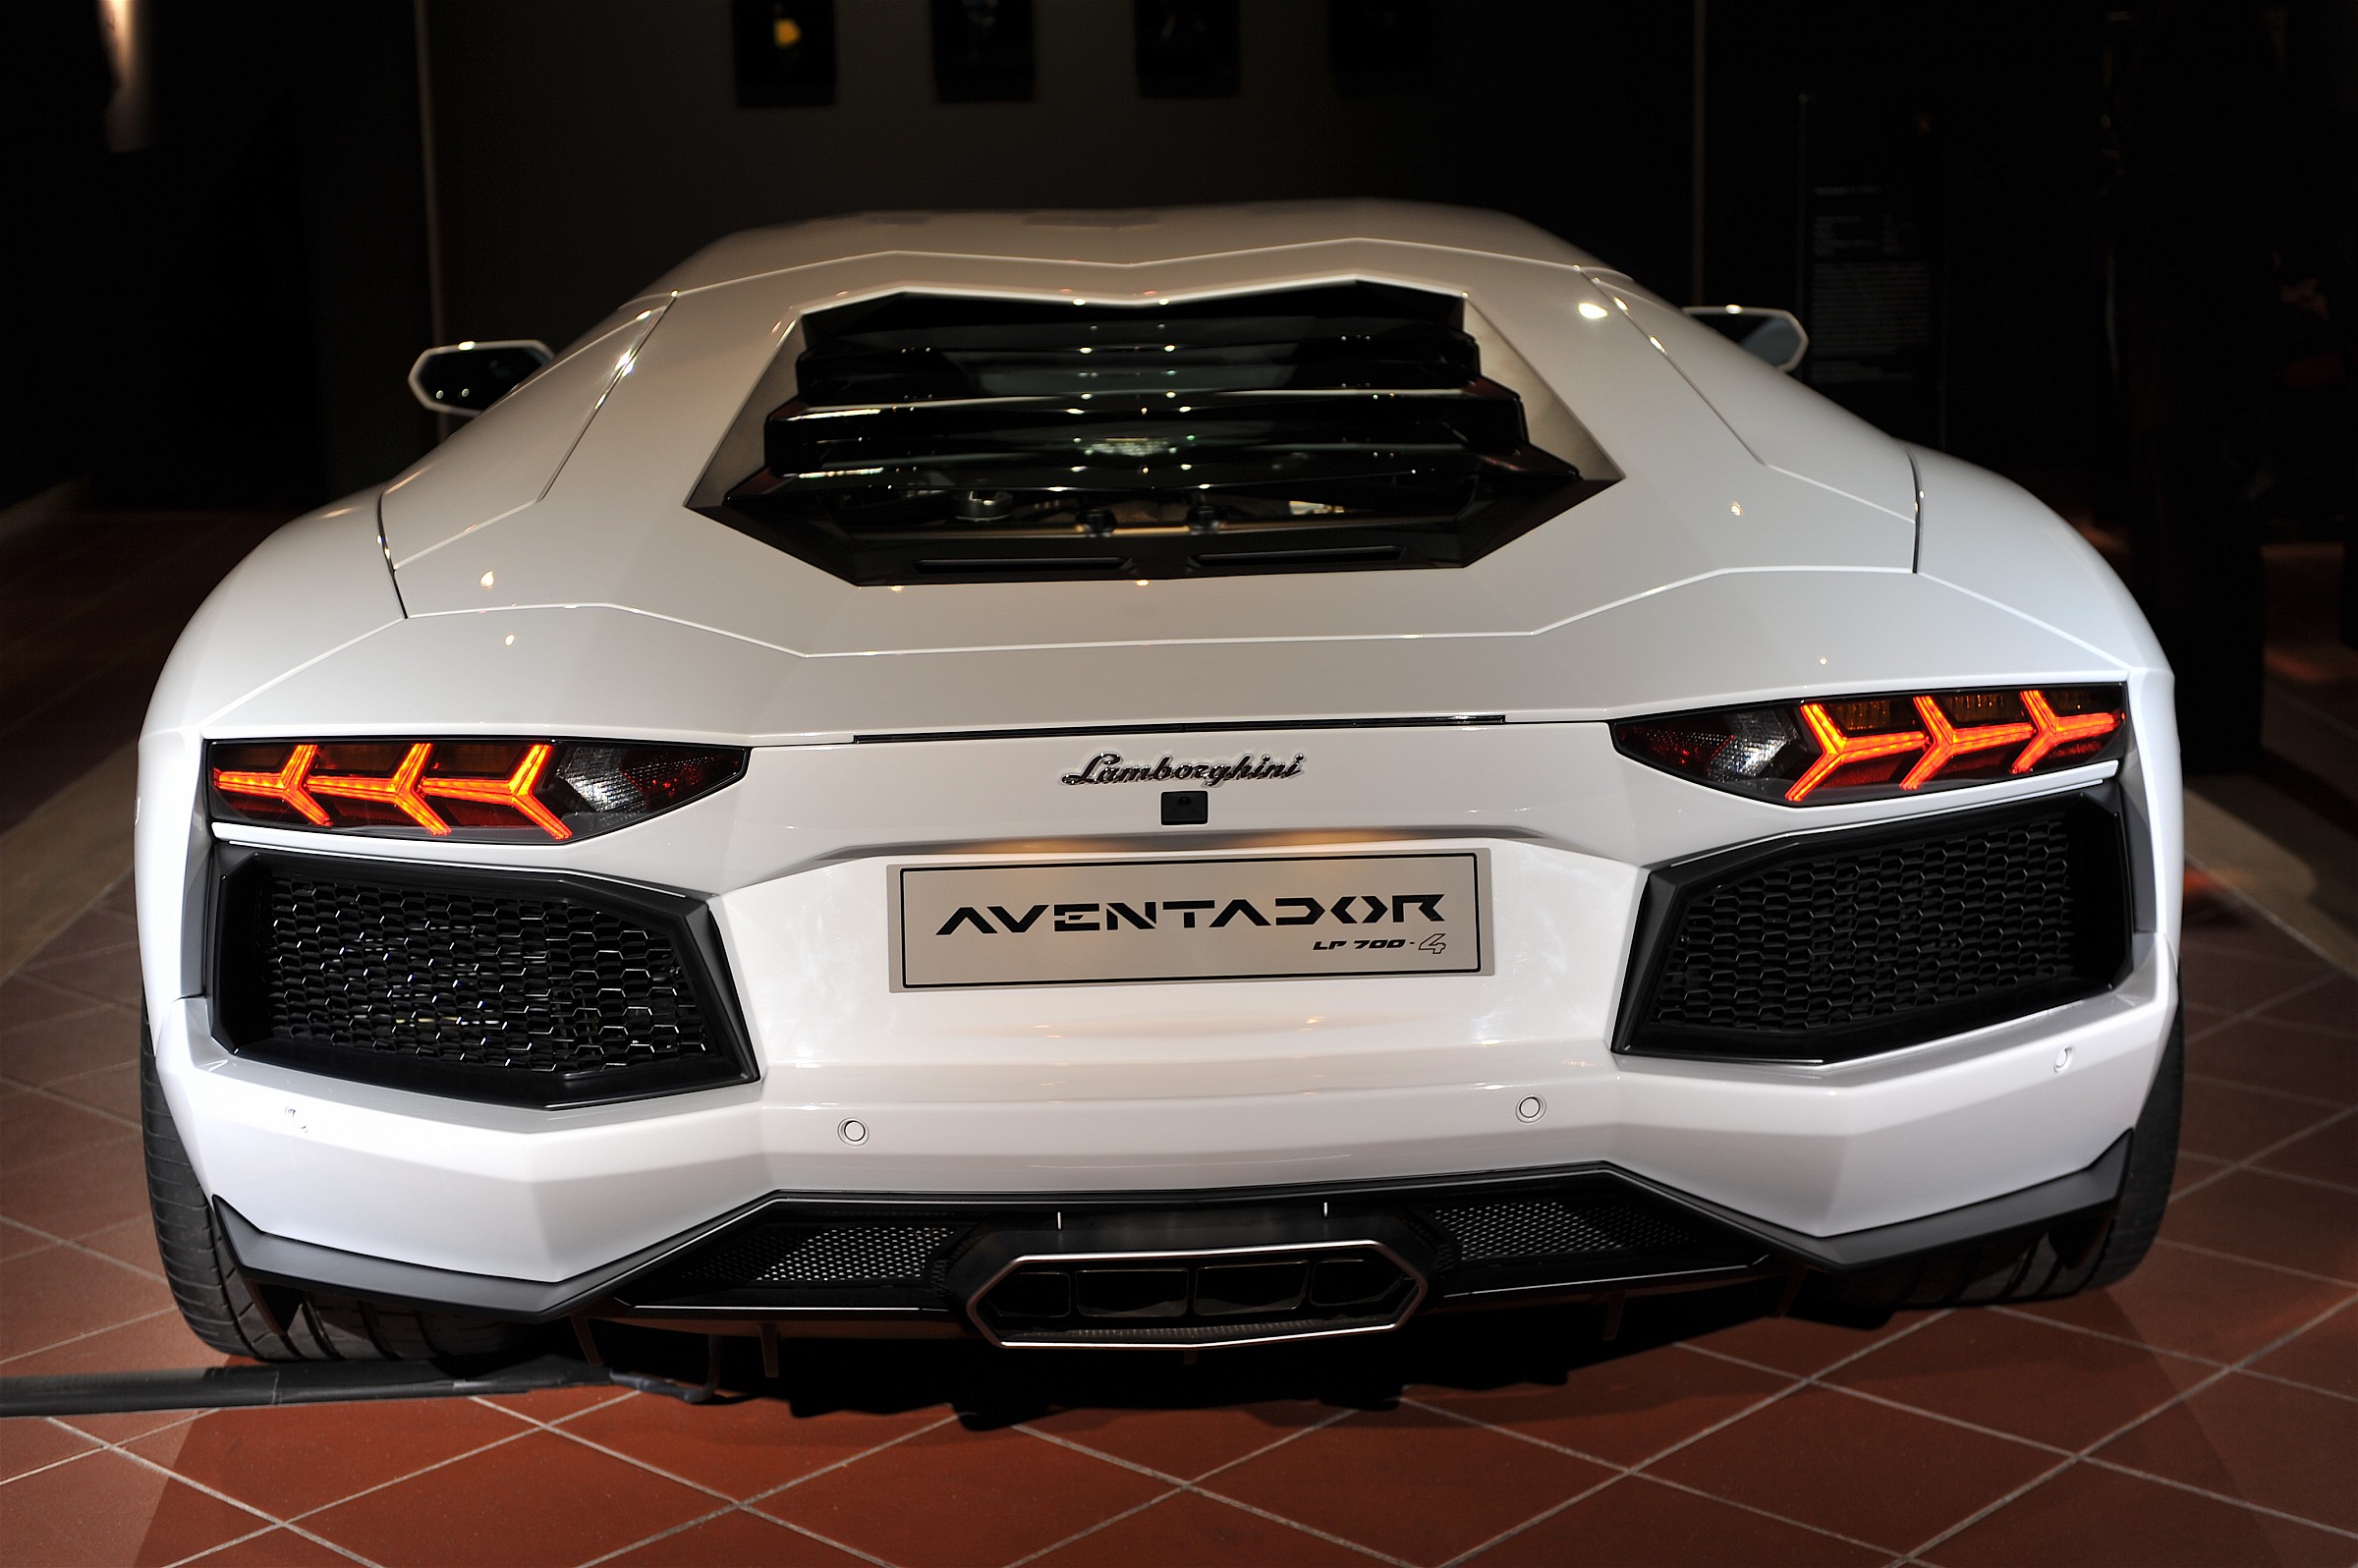 Lamborghini Aventador...